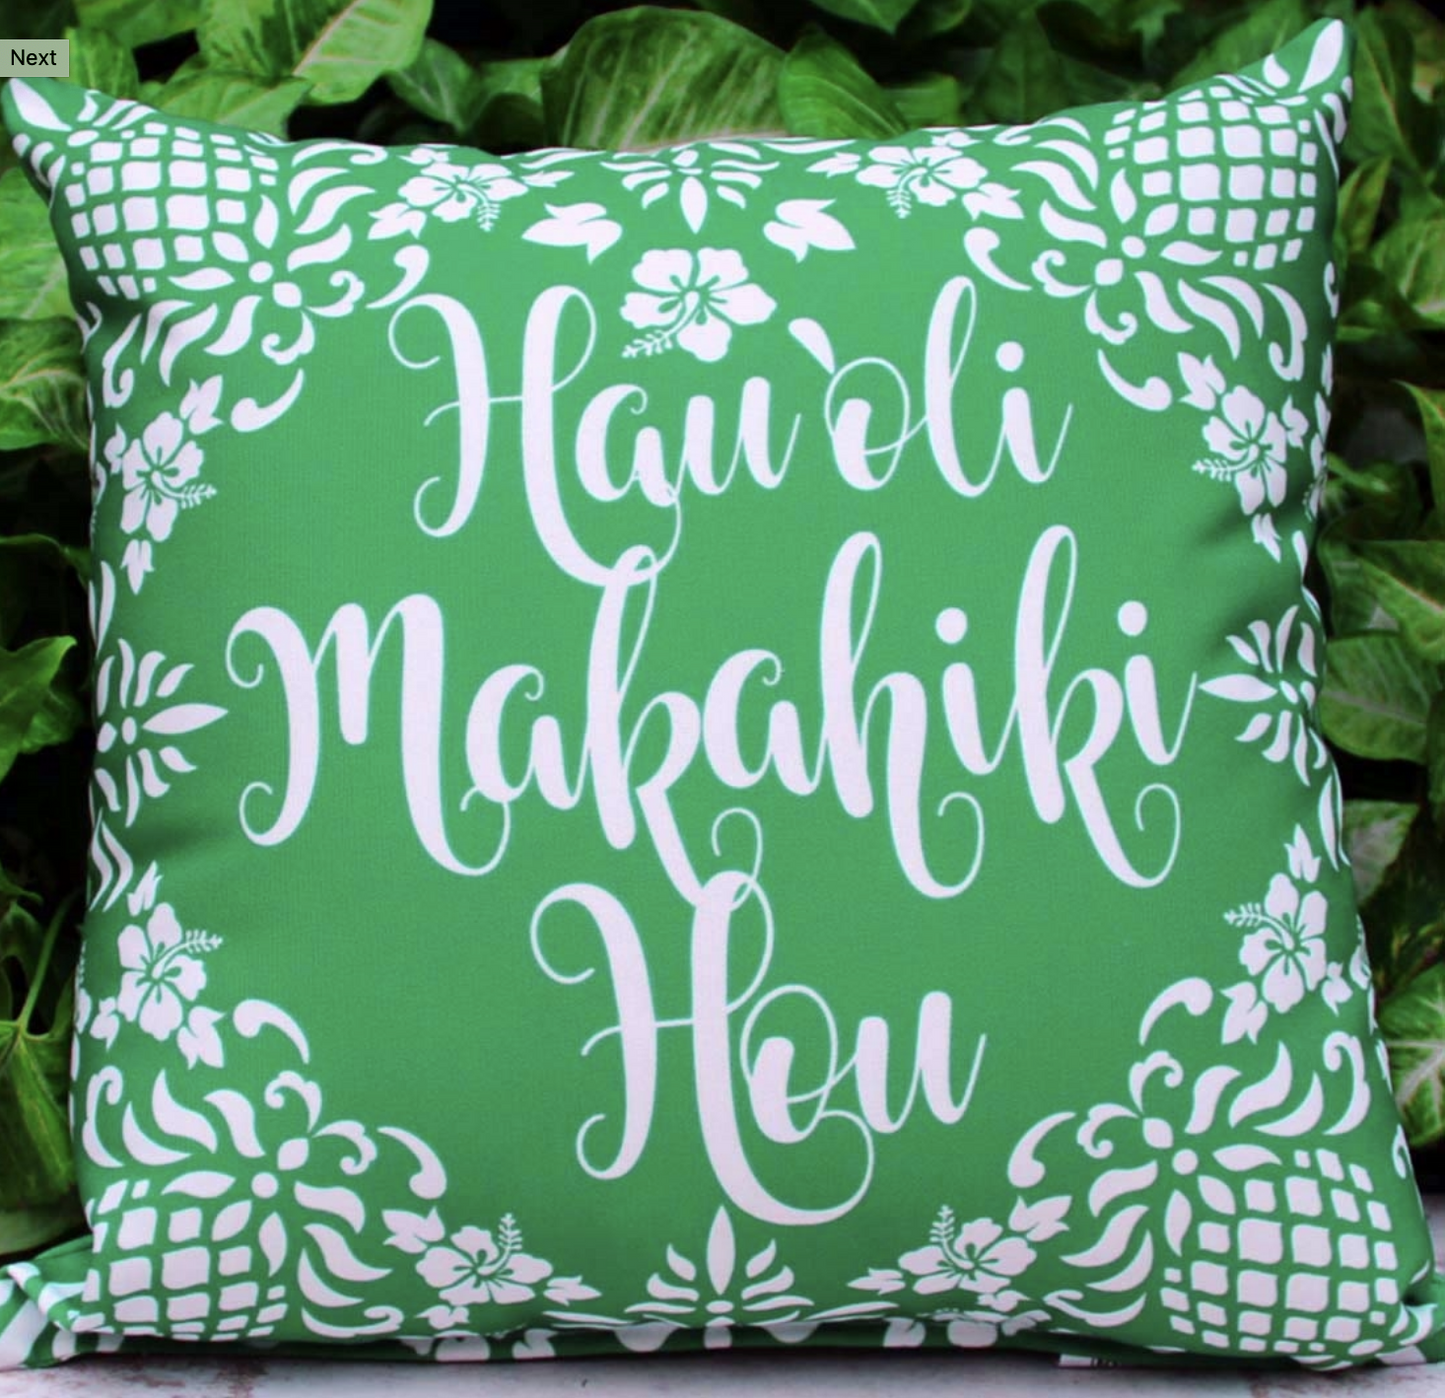 Hawaiian Holiday Pillow Hauoli Makahiki Hou Front